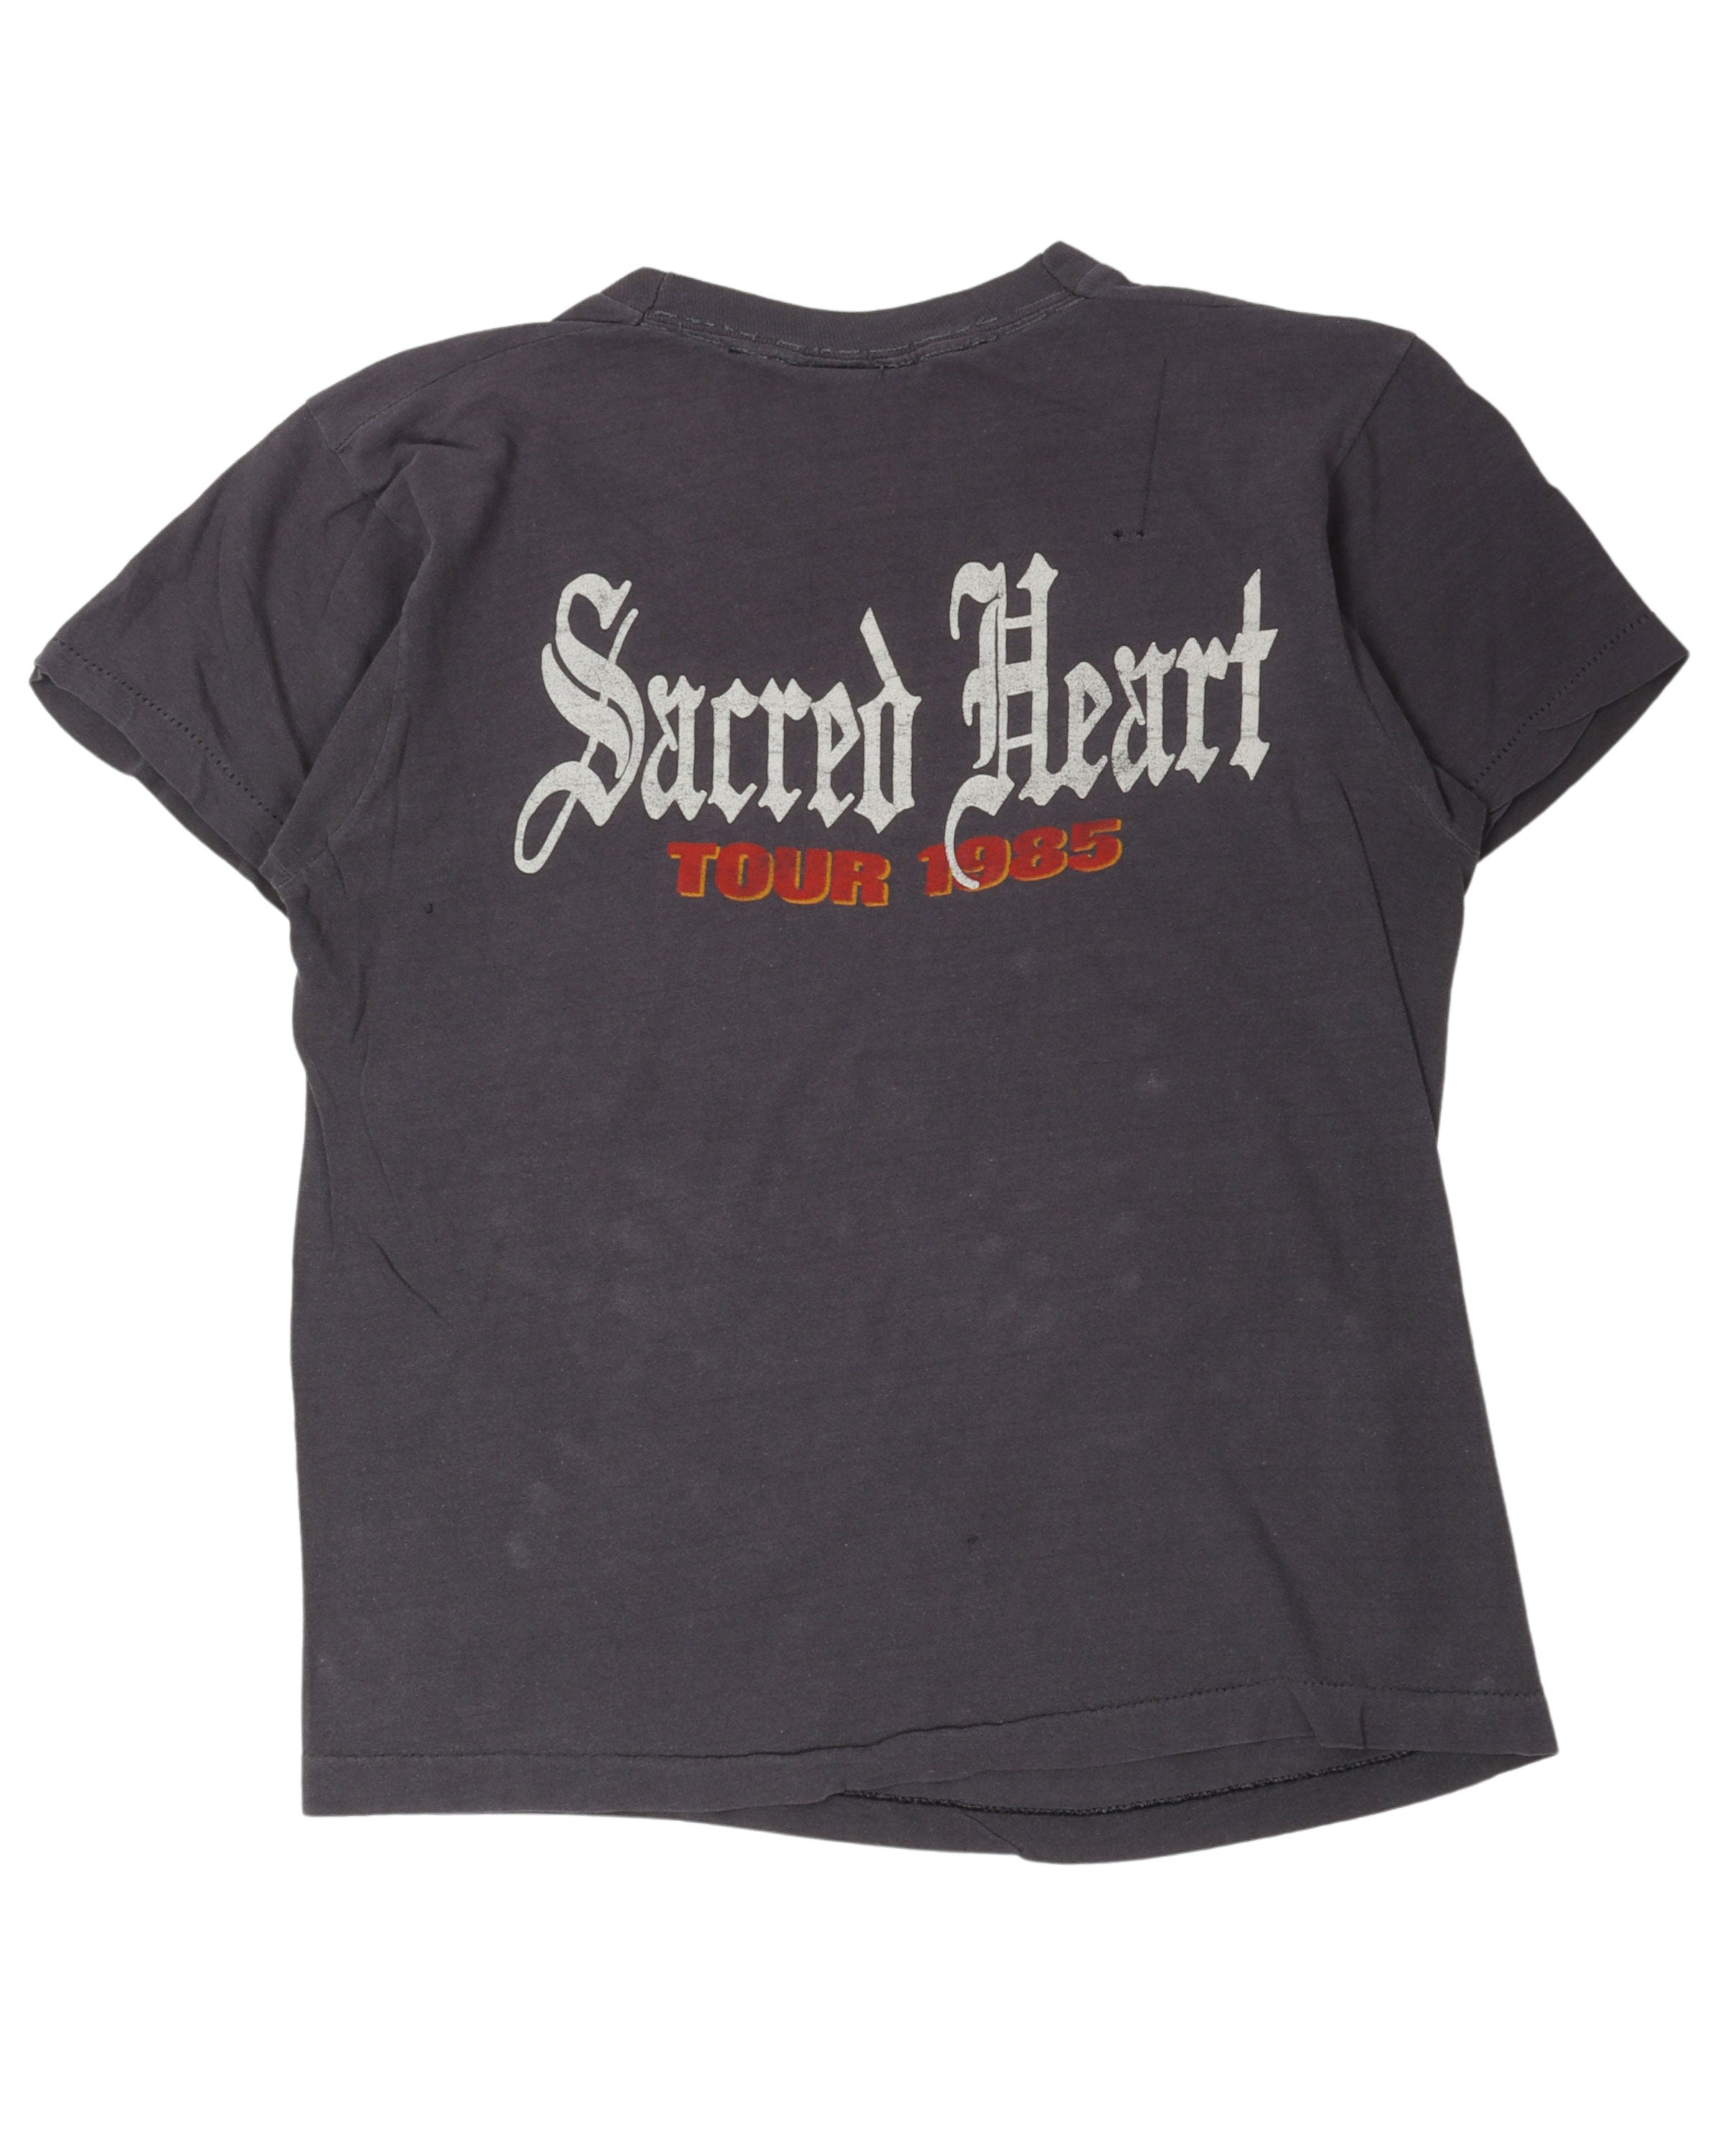 D10 Sacred Heart Tour 1985 T-Shirt